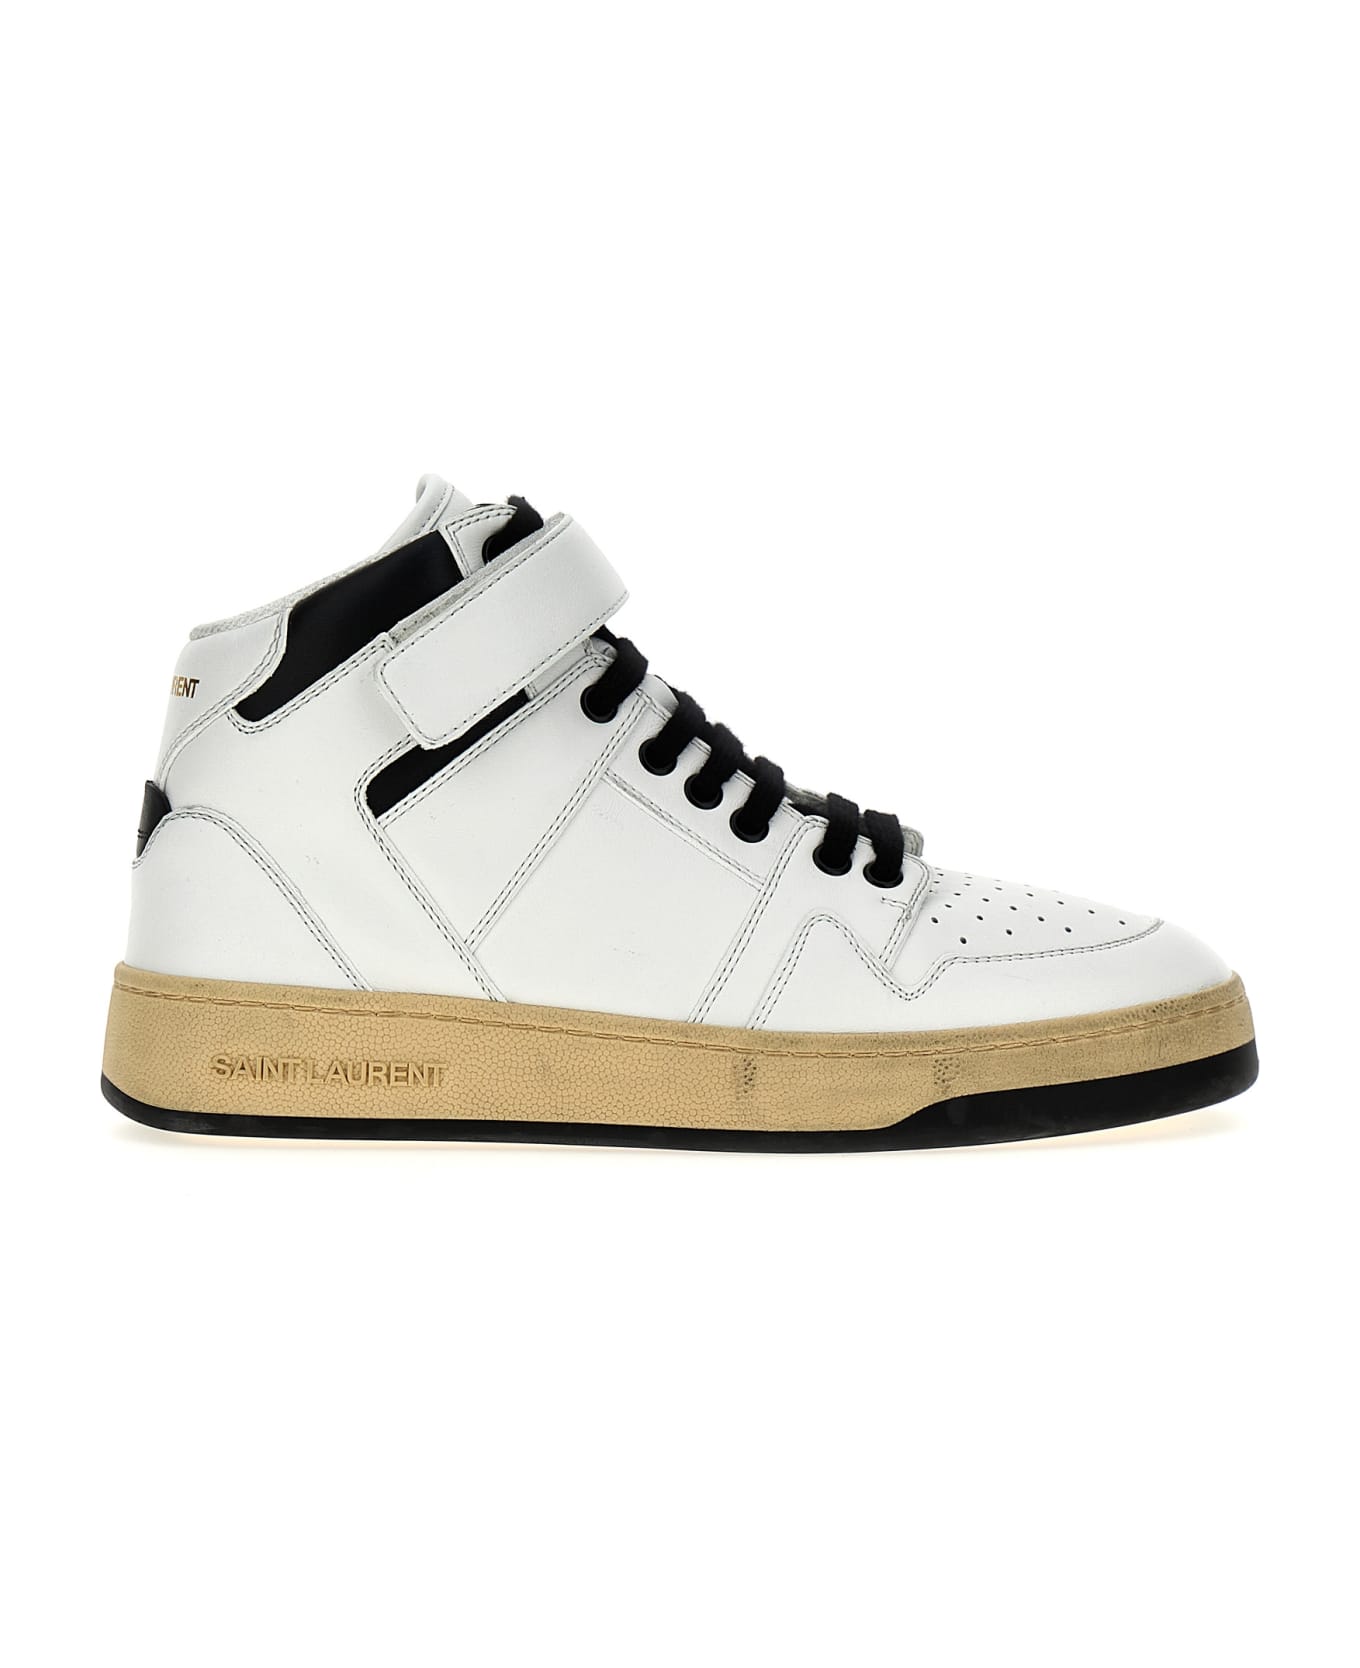 Saint Laurent Lax Sneakers - White/Black